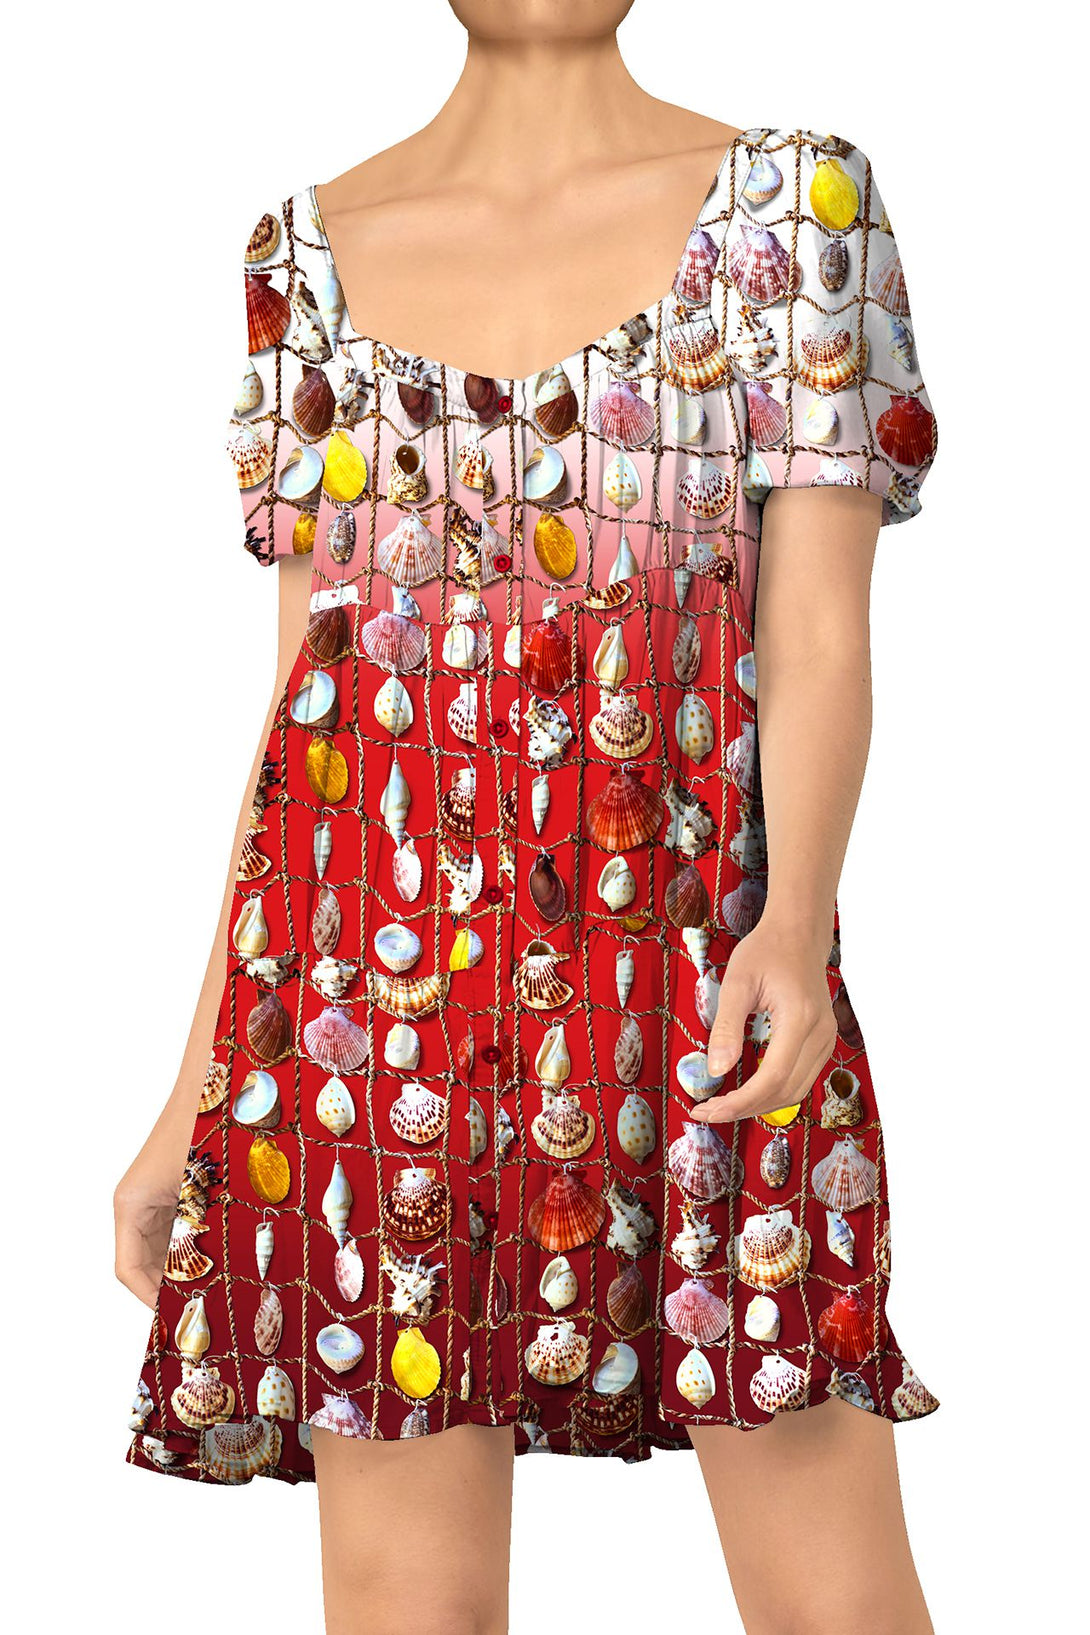 "casual mini dress" "Shahida Parides" "summer mini dress" "unique mini dresses"